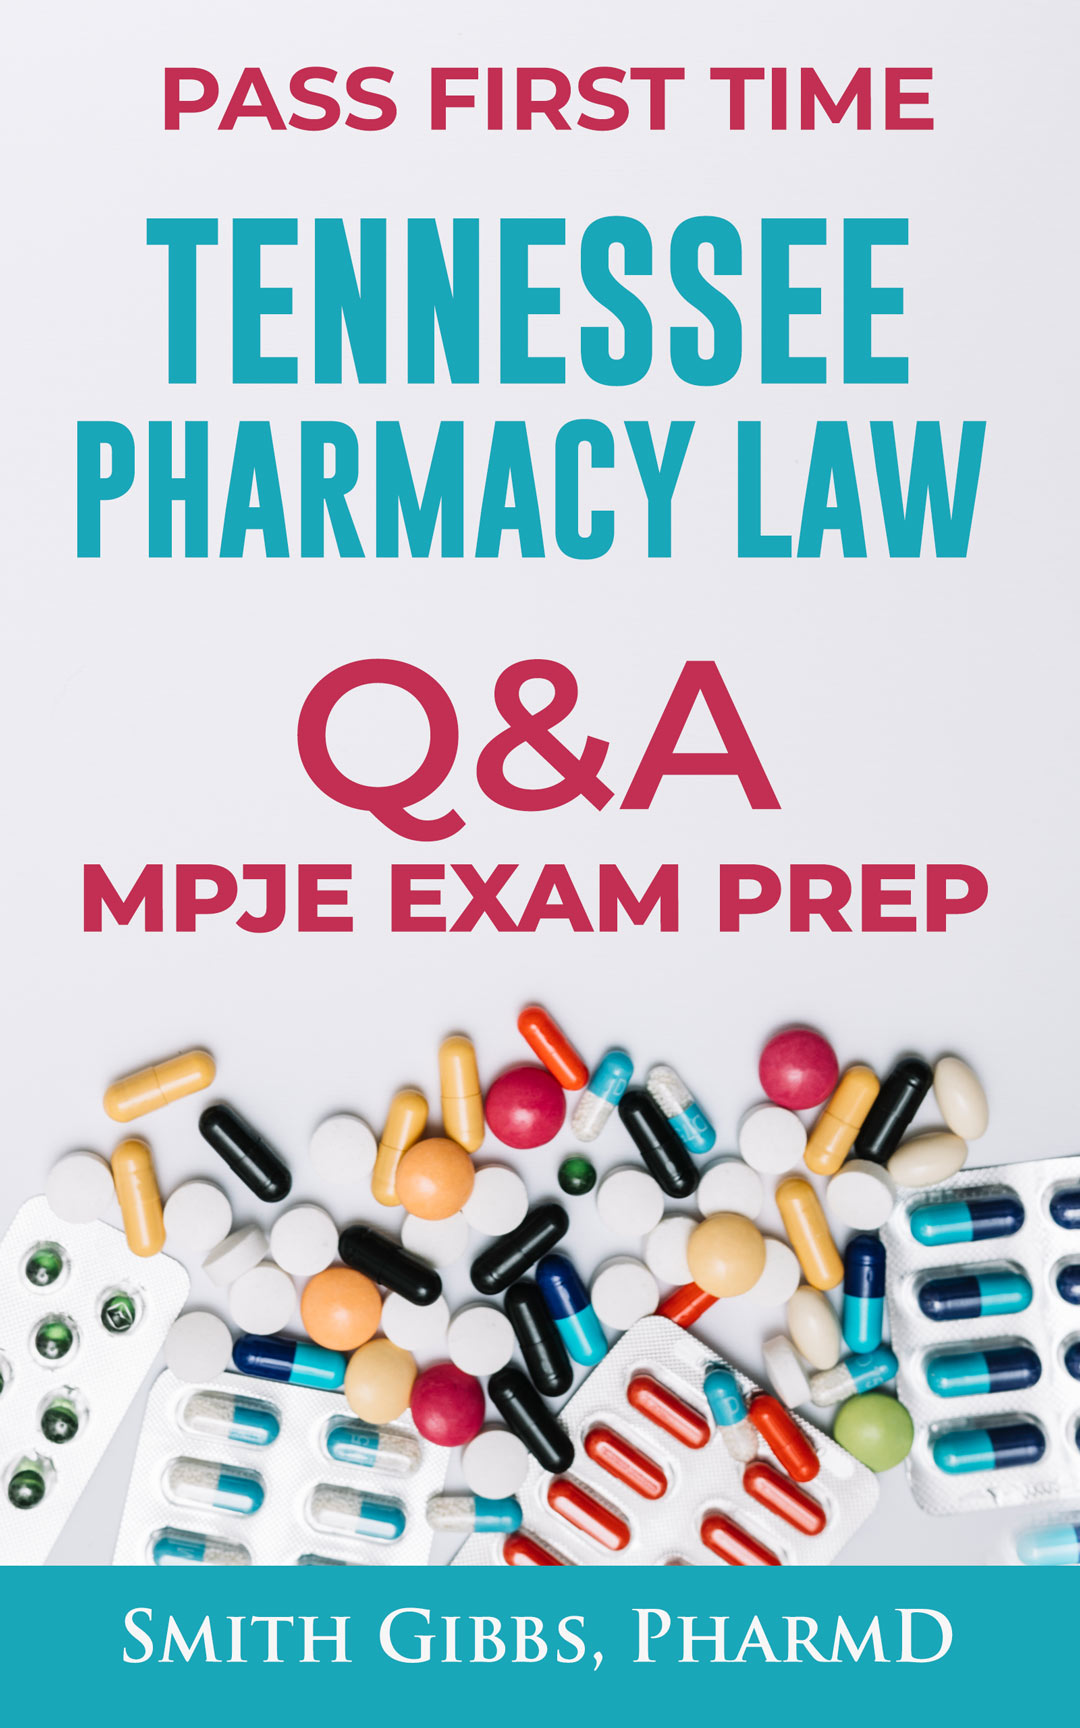 Tennessee Pharmacy Law MPJE Exam Prep Q & A